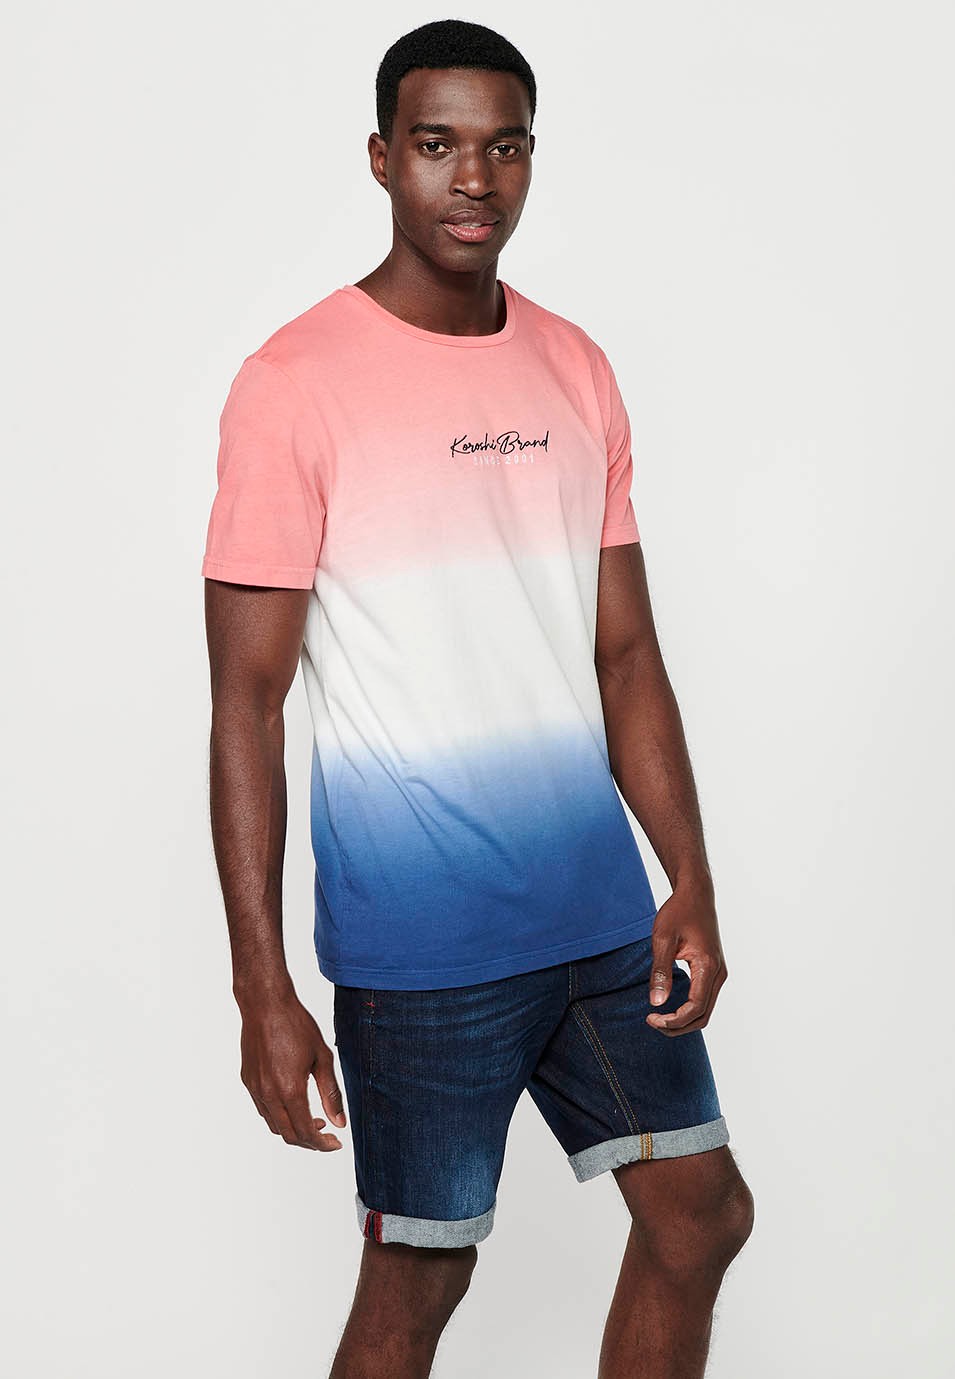 Short-sleeved cotton t-shirt, gradient effect for men